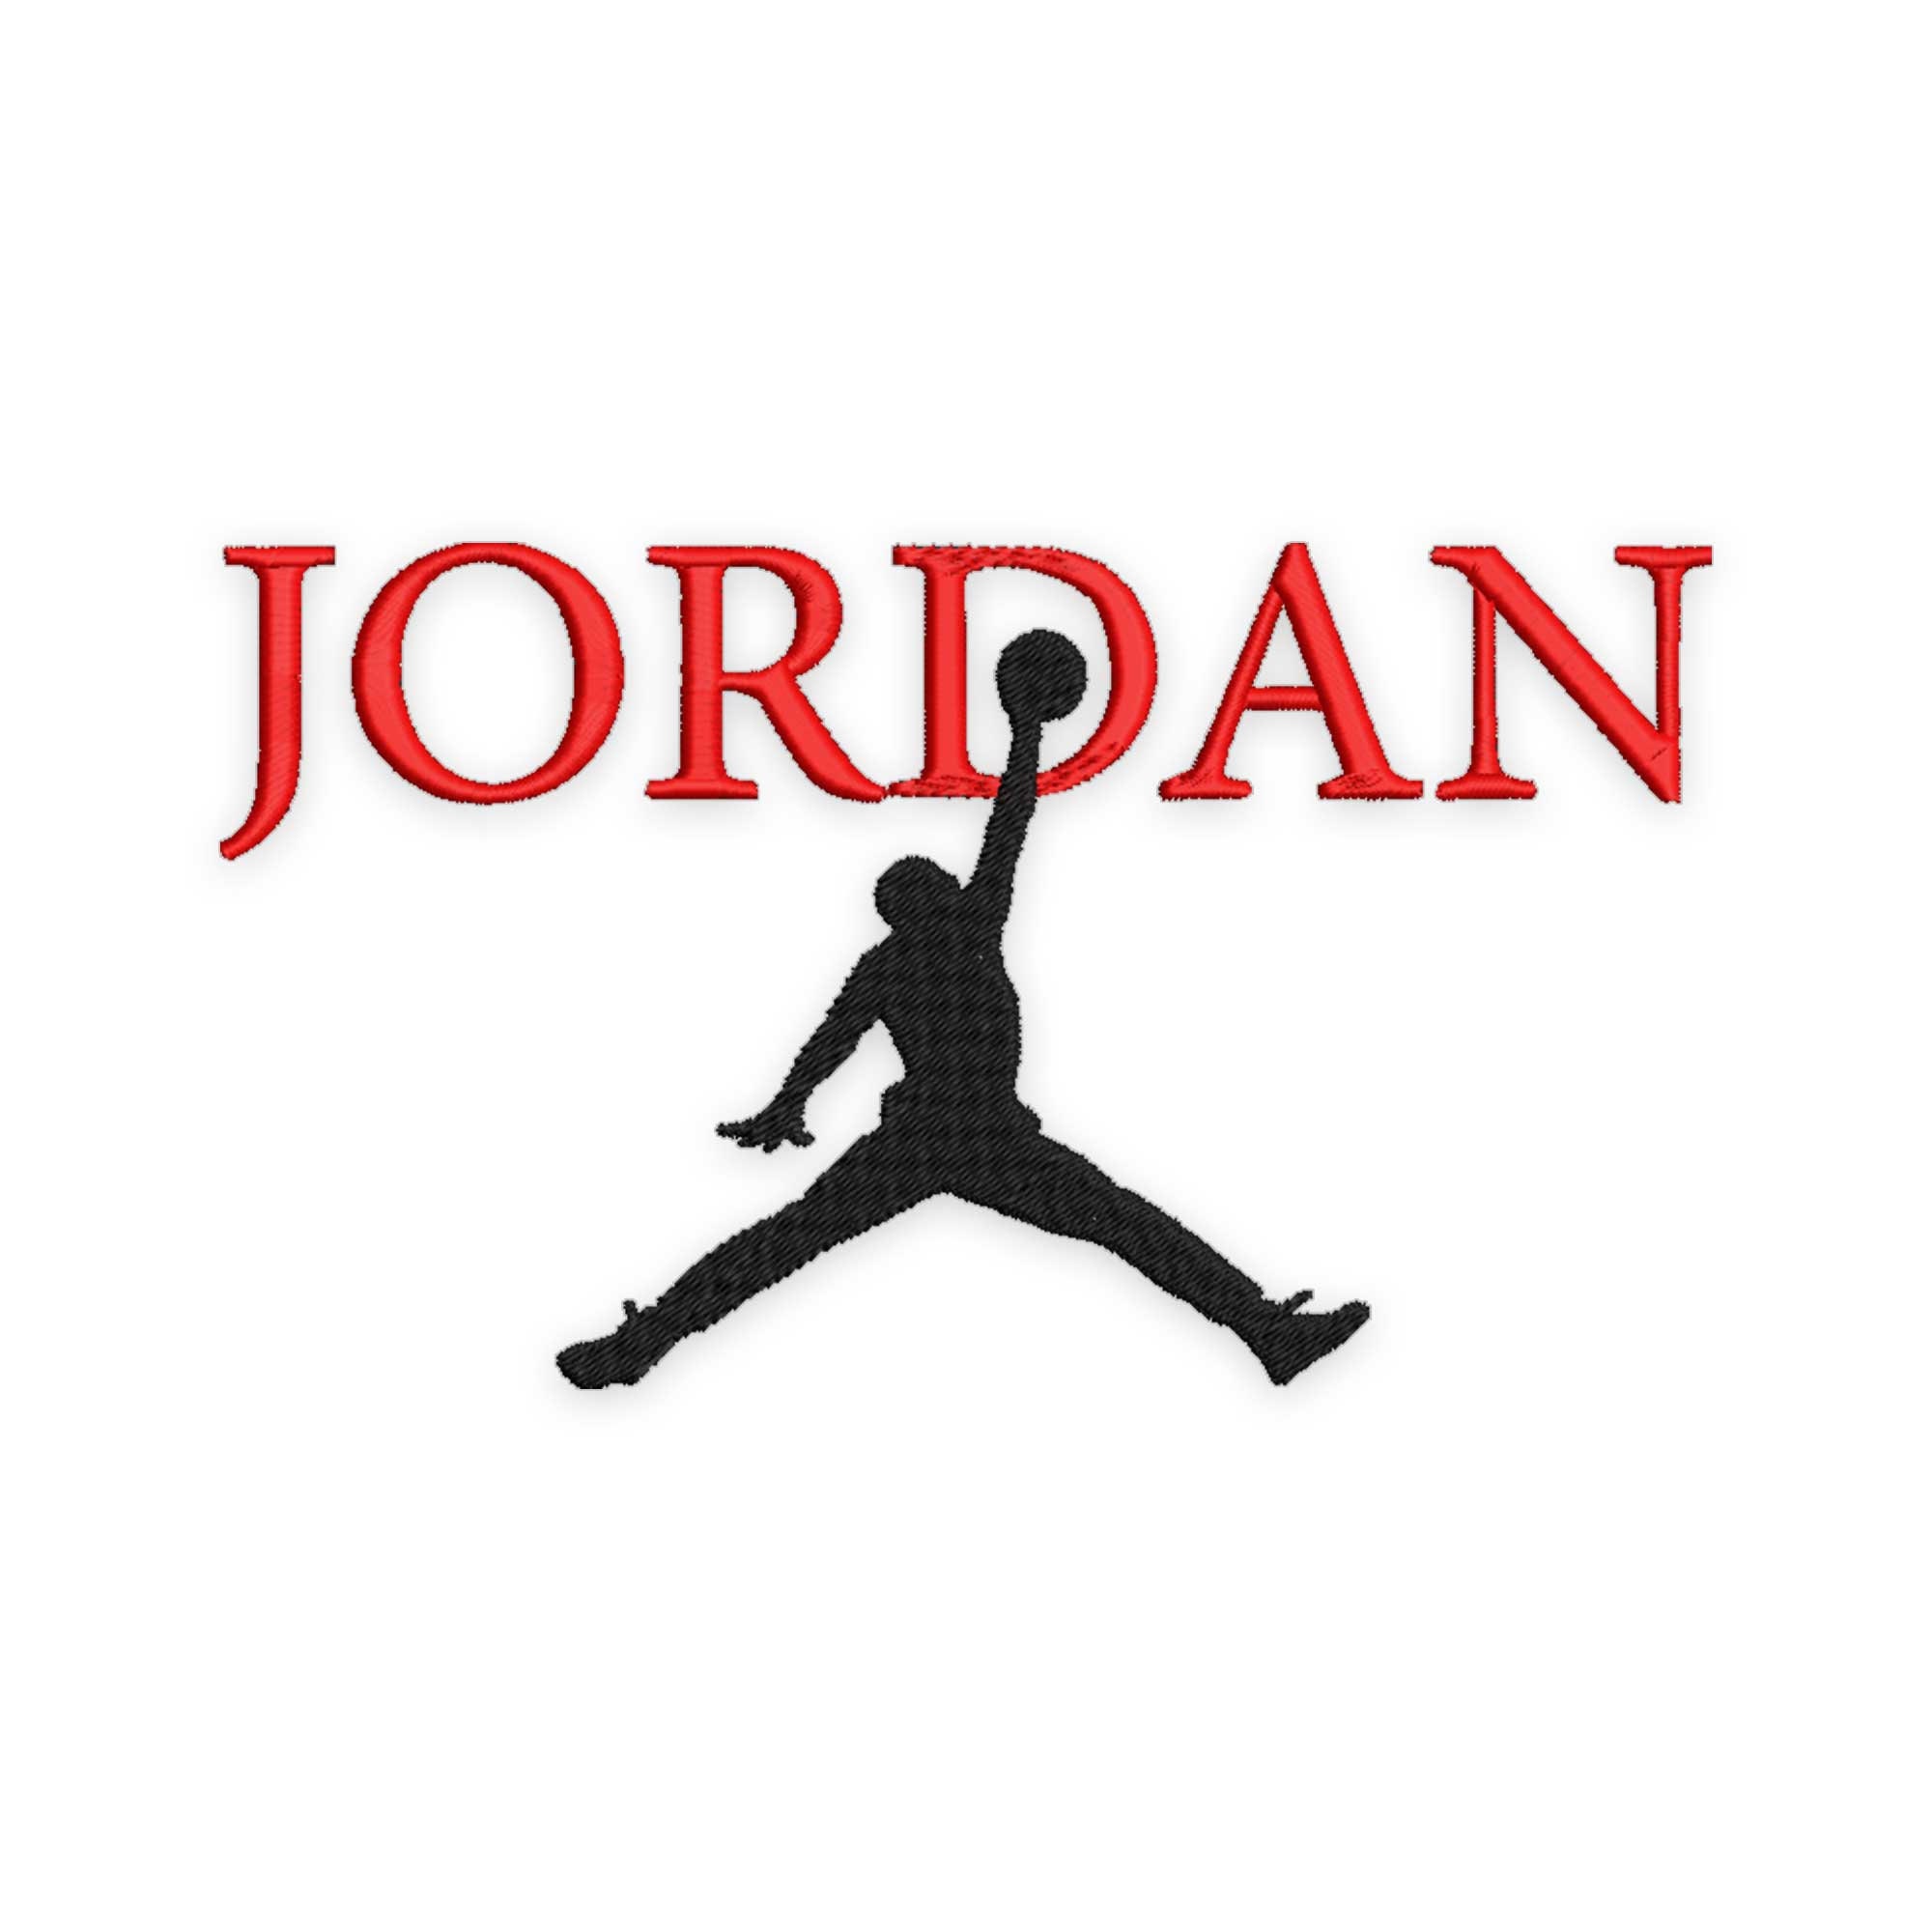 Nike air jordan 1 embroidery Design Nike Logo exp dst hus | Etsy